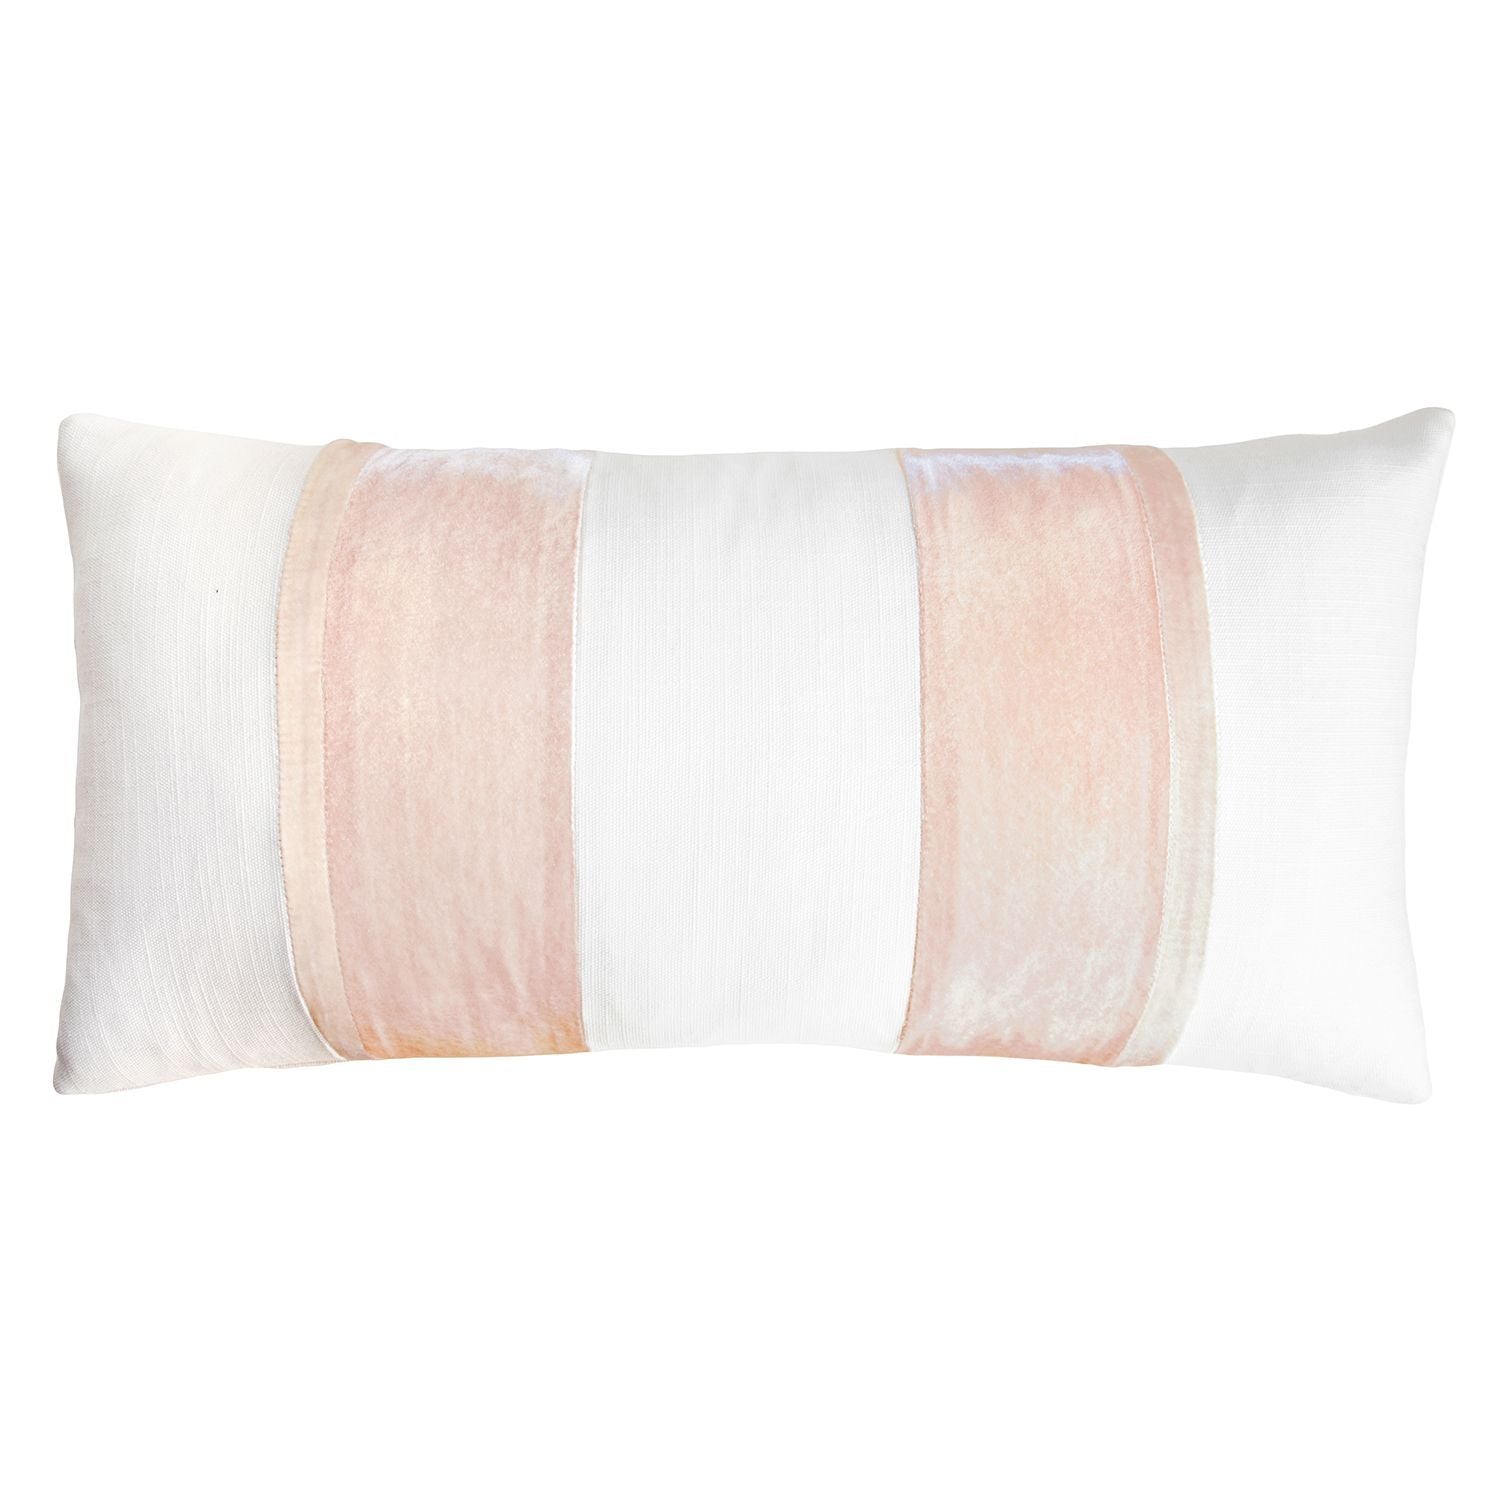 Fig Linens - White & Blush Stripe Oblong Throw Pillow by Kevin O'Brien Studio